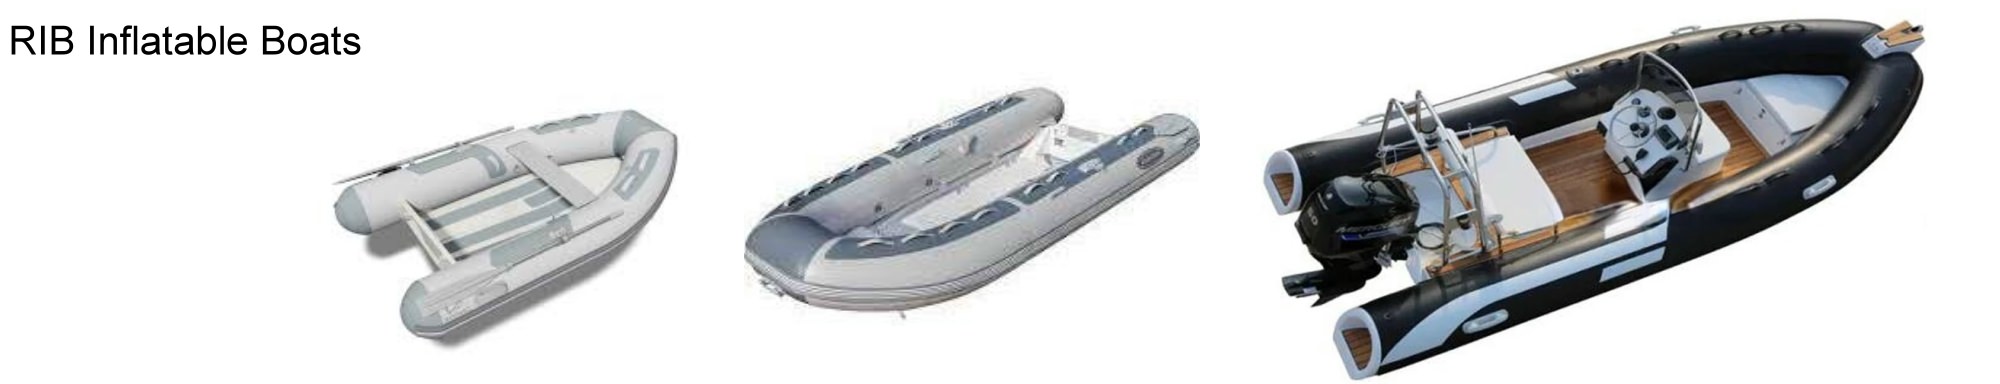 RIB inflatable boats